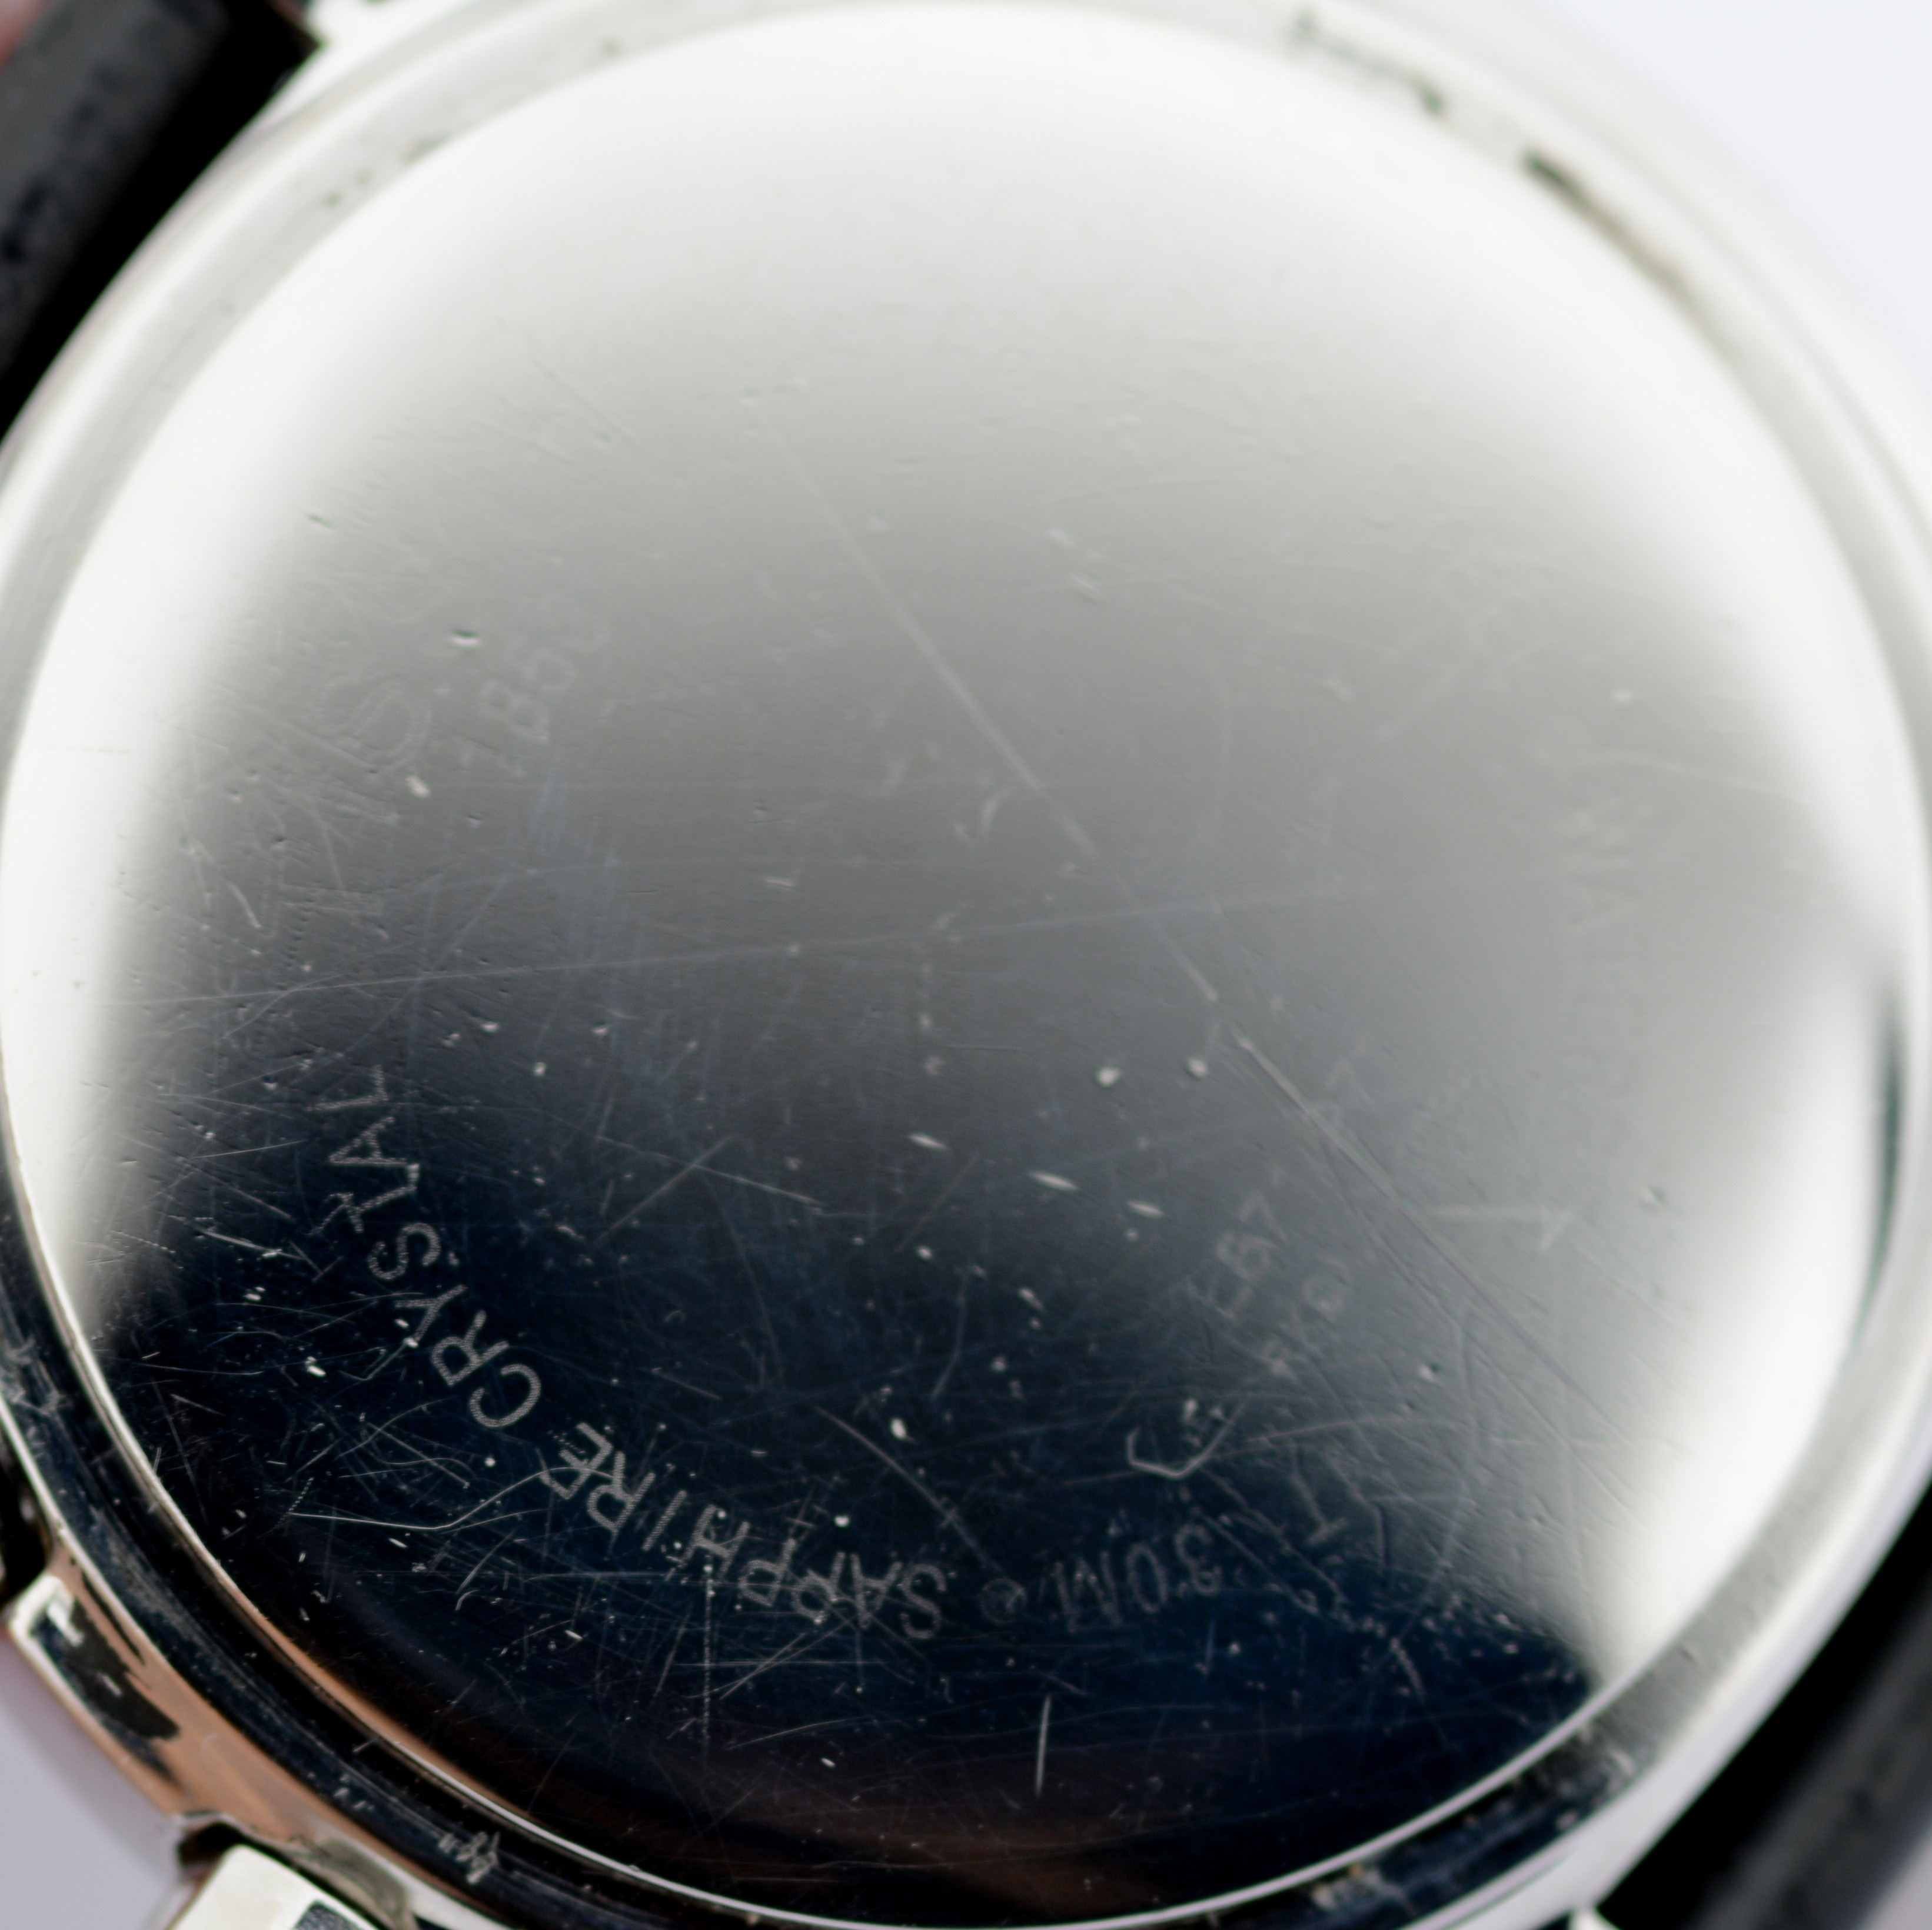 Tissot / Alarm Date - Gentlmen's Steel Wrist Watch - Image 6 of 10